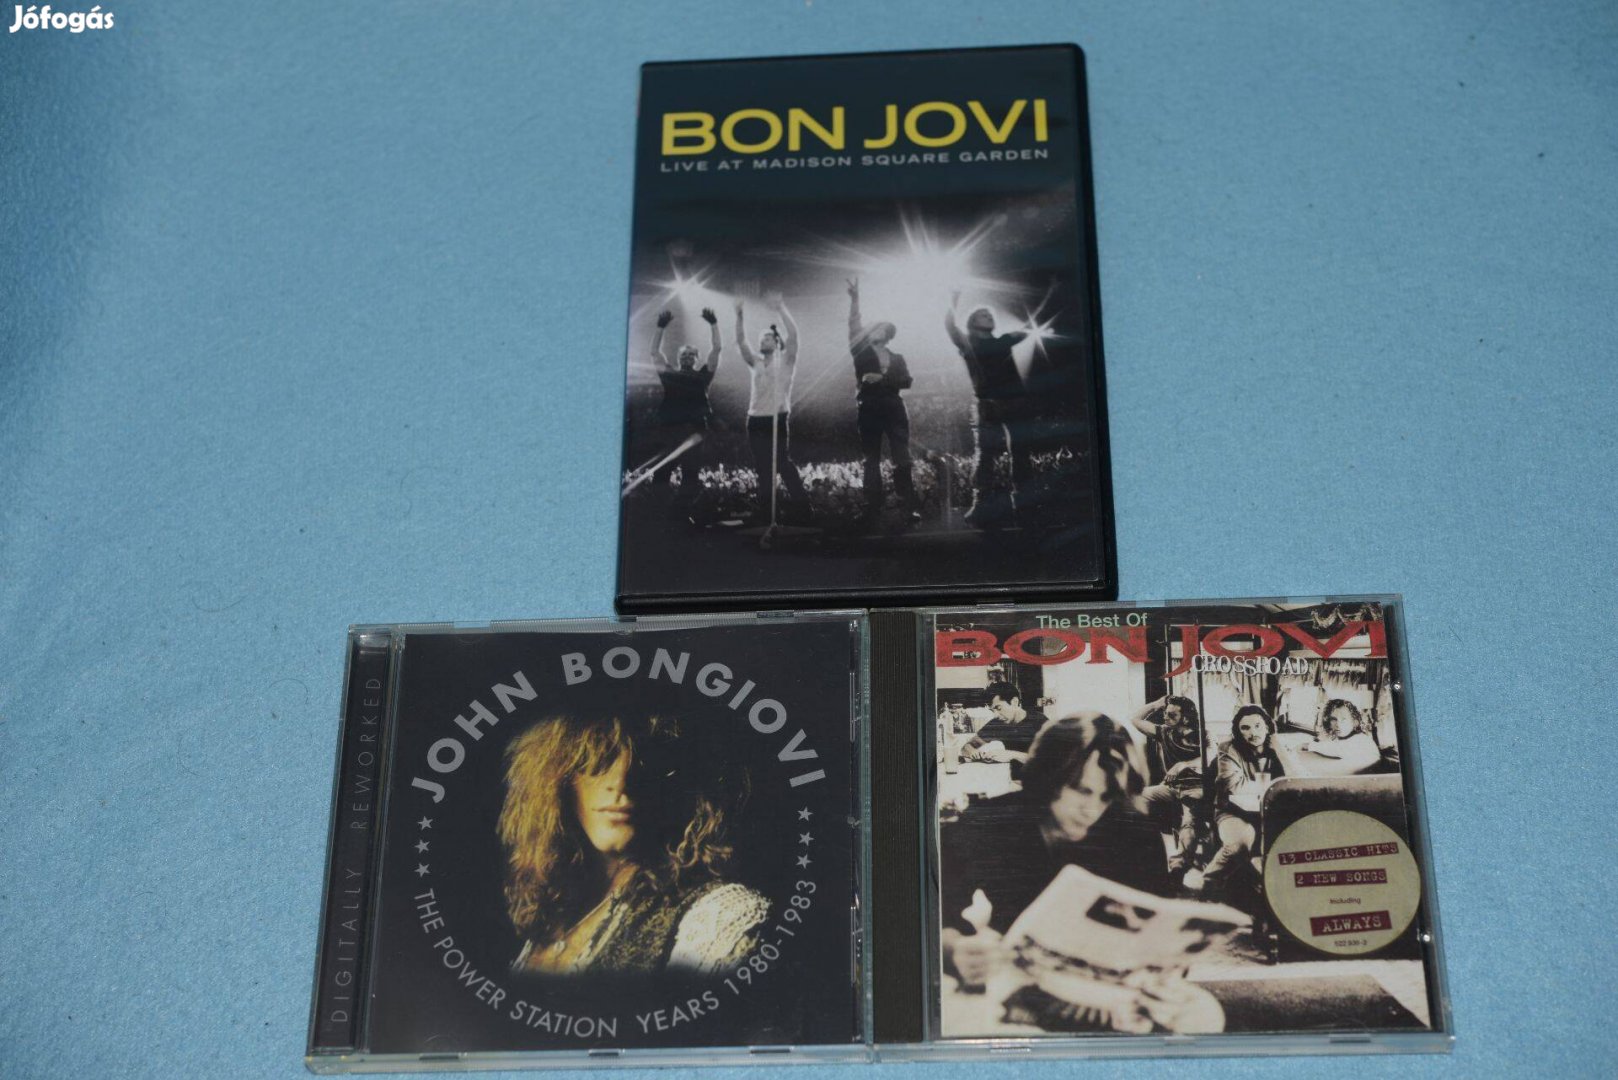 Bon Jovi - DVD + 2 CD